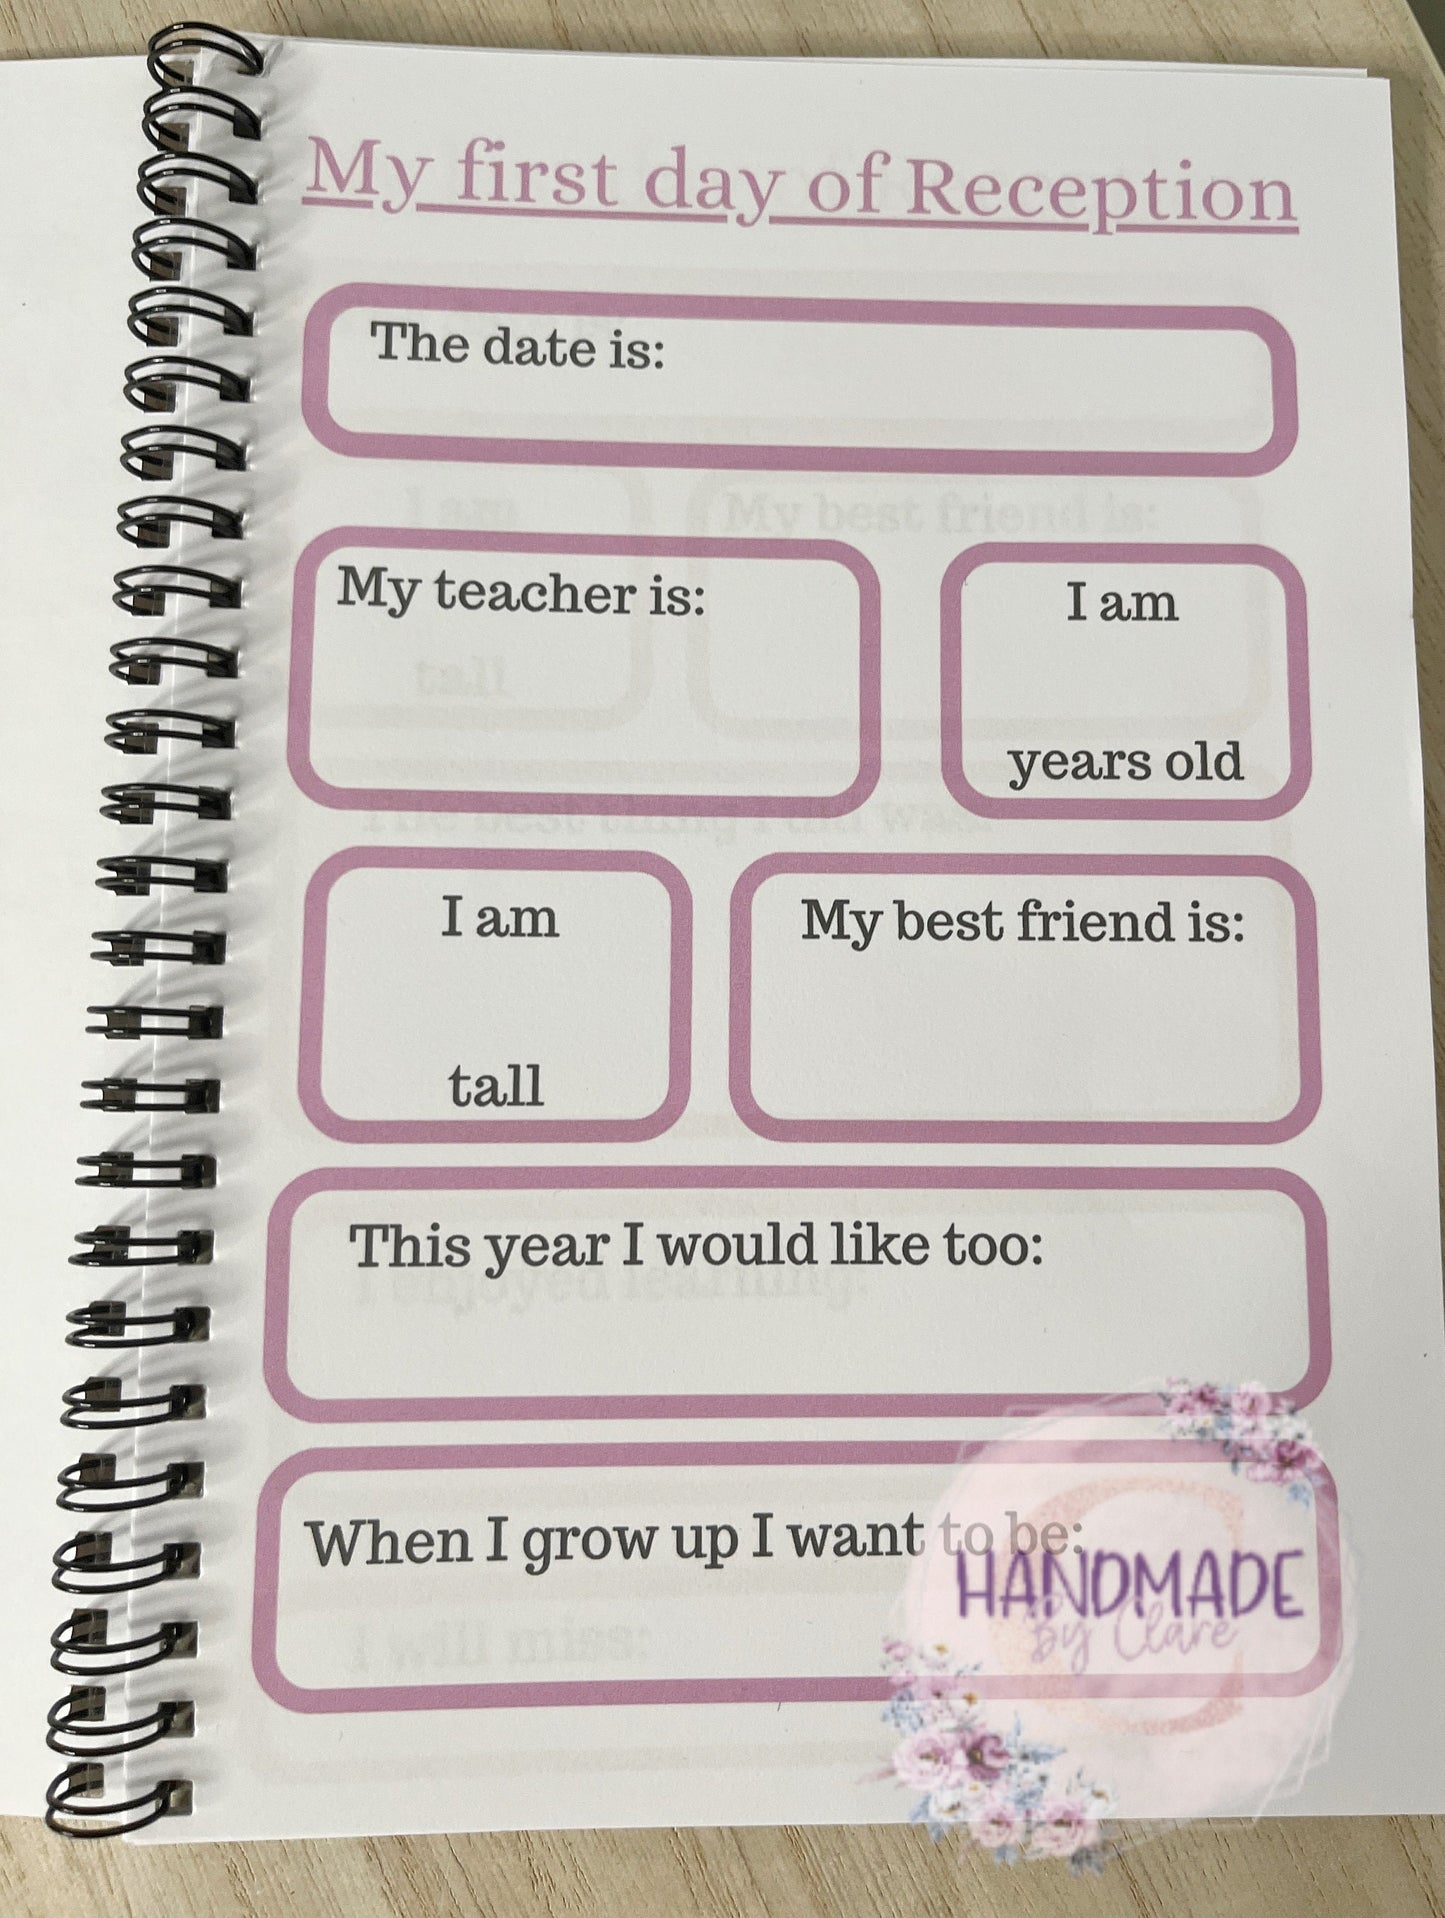 Personalised school memories book | Primary Years | school journal | memory book | notebook | journaling | First day of school